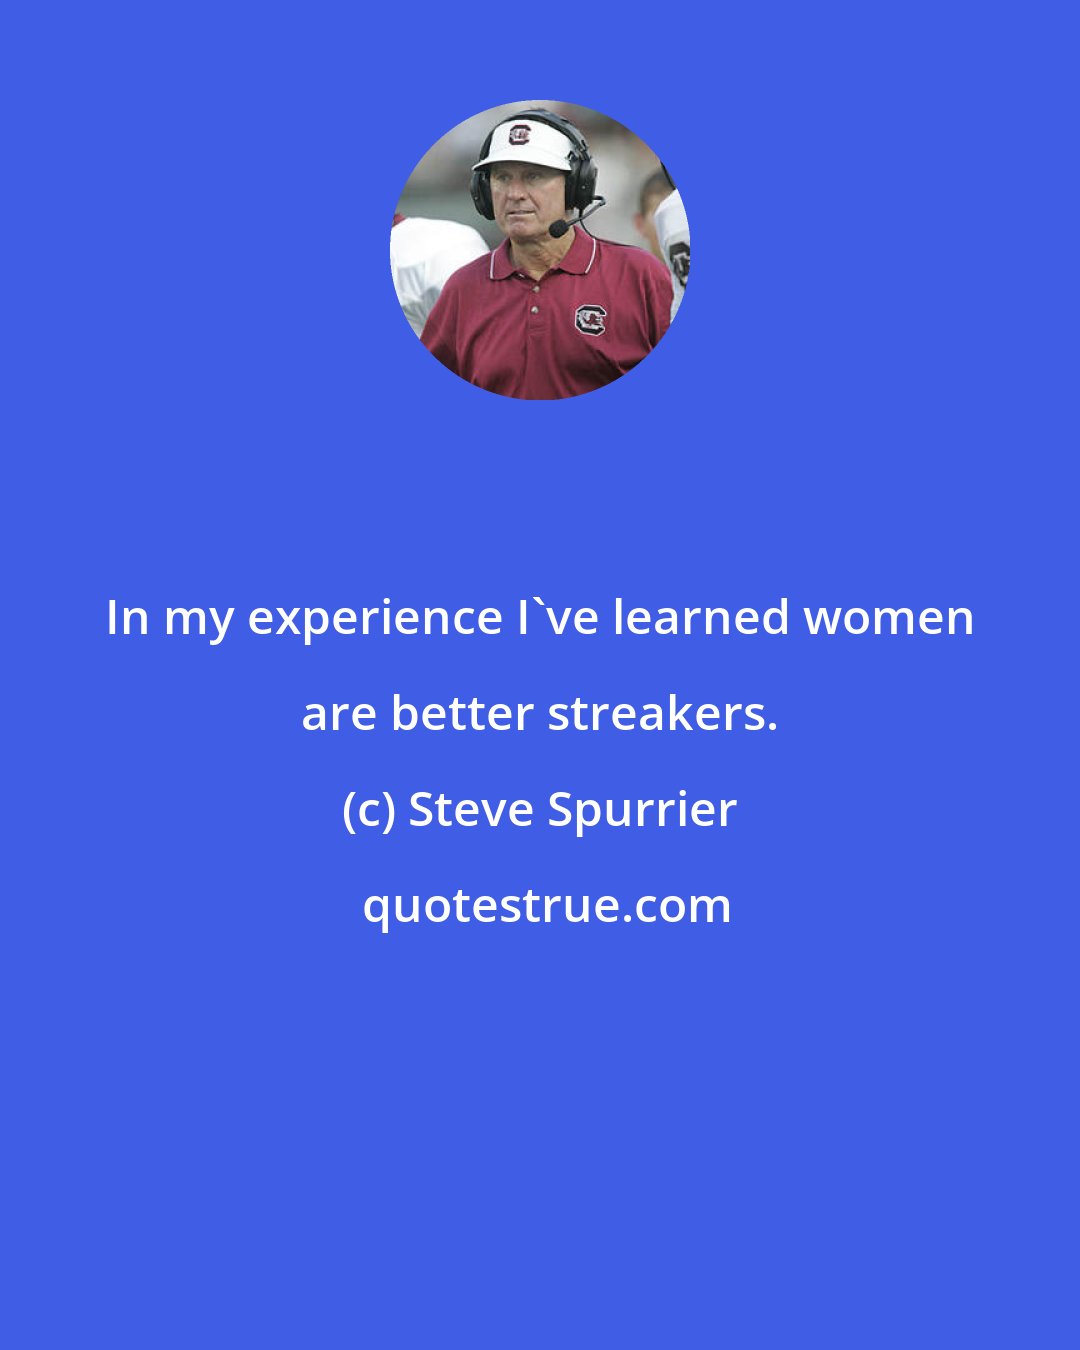 Steve Spurrier: In my experience I've learned women are better streakers.